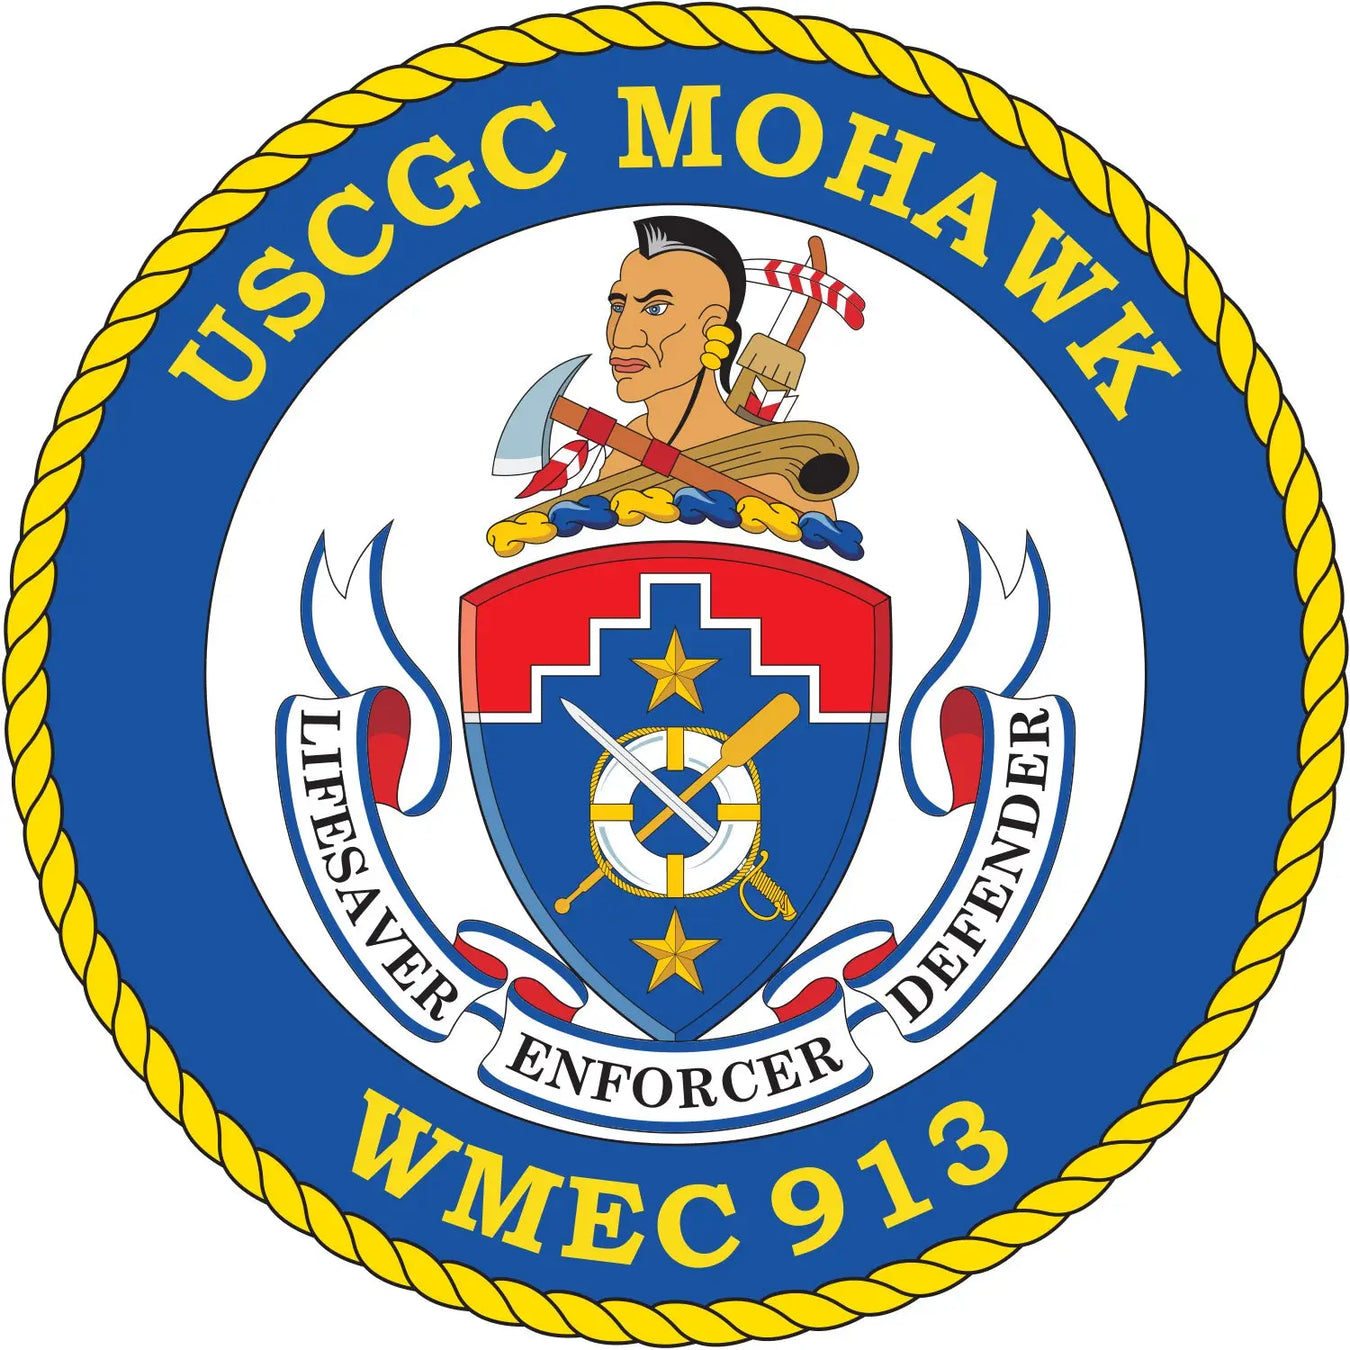 USCGC Mohawk (WMEC-913)